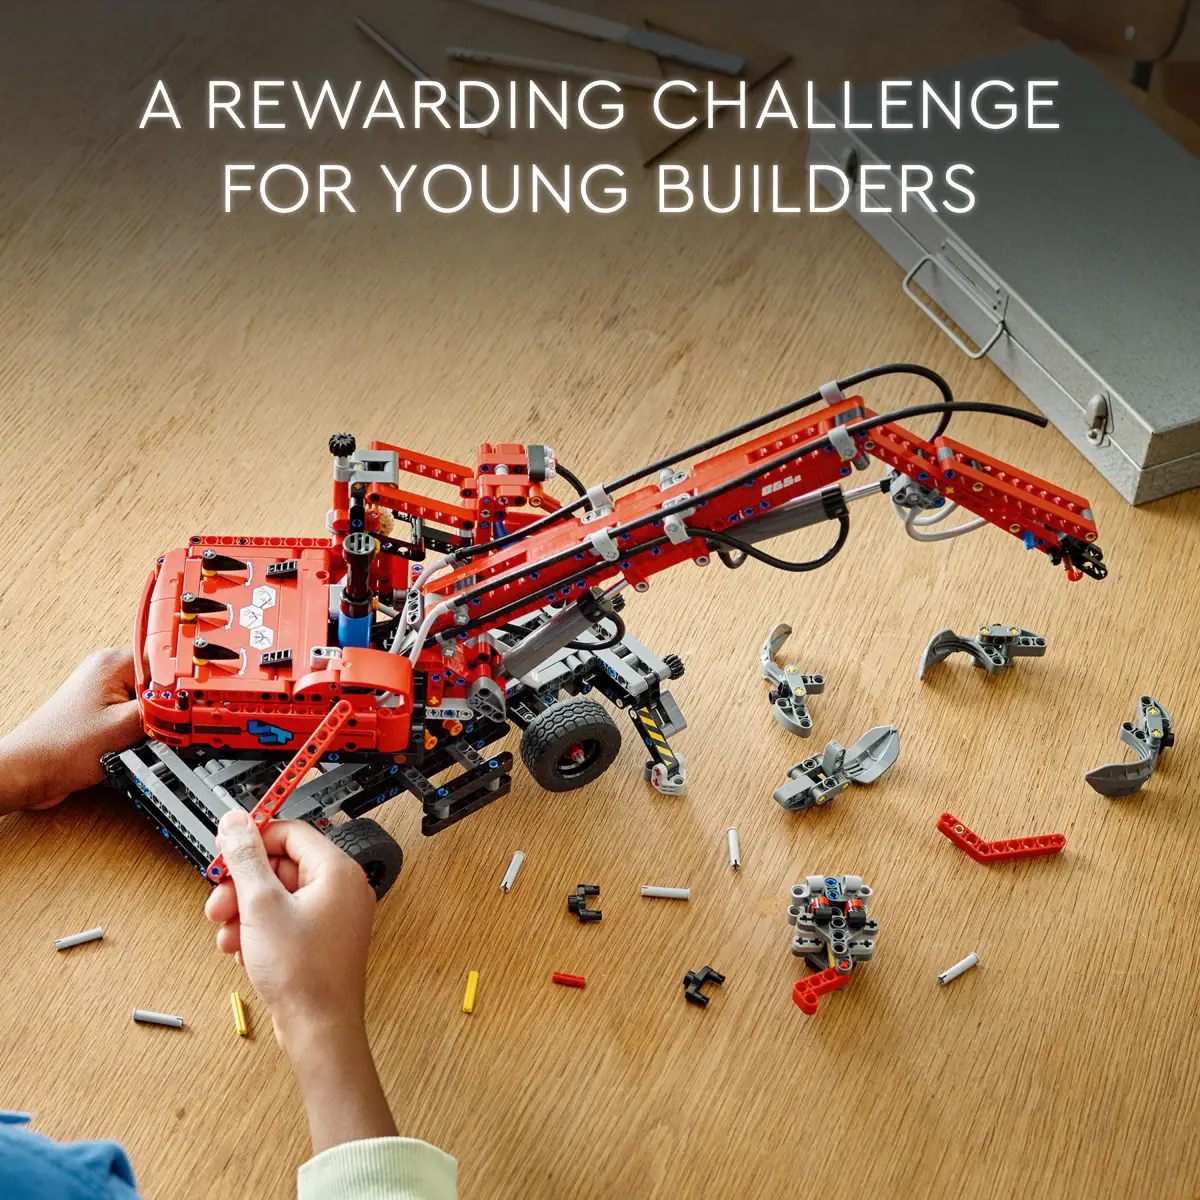 Lego Technic Material Handler 42144 Crane Model Building Kit (835 Pieces)